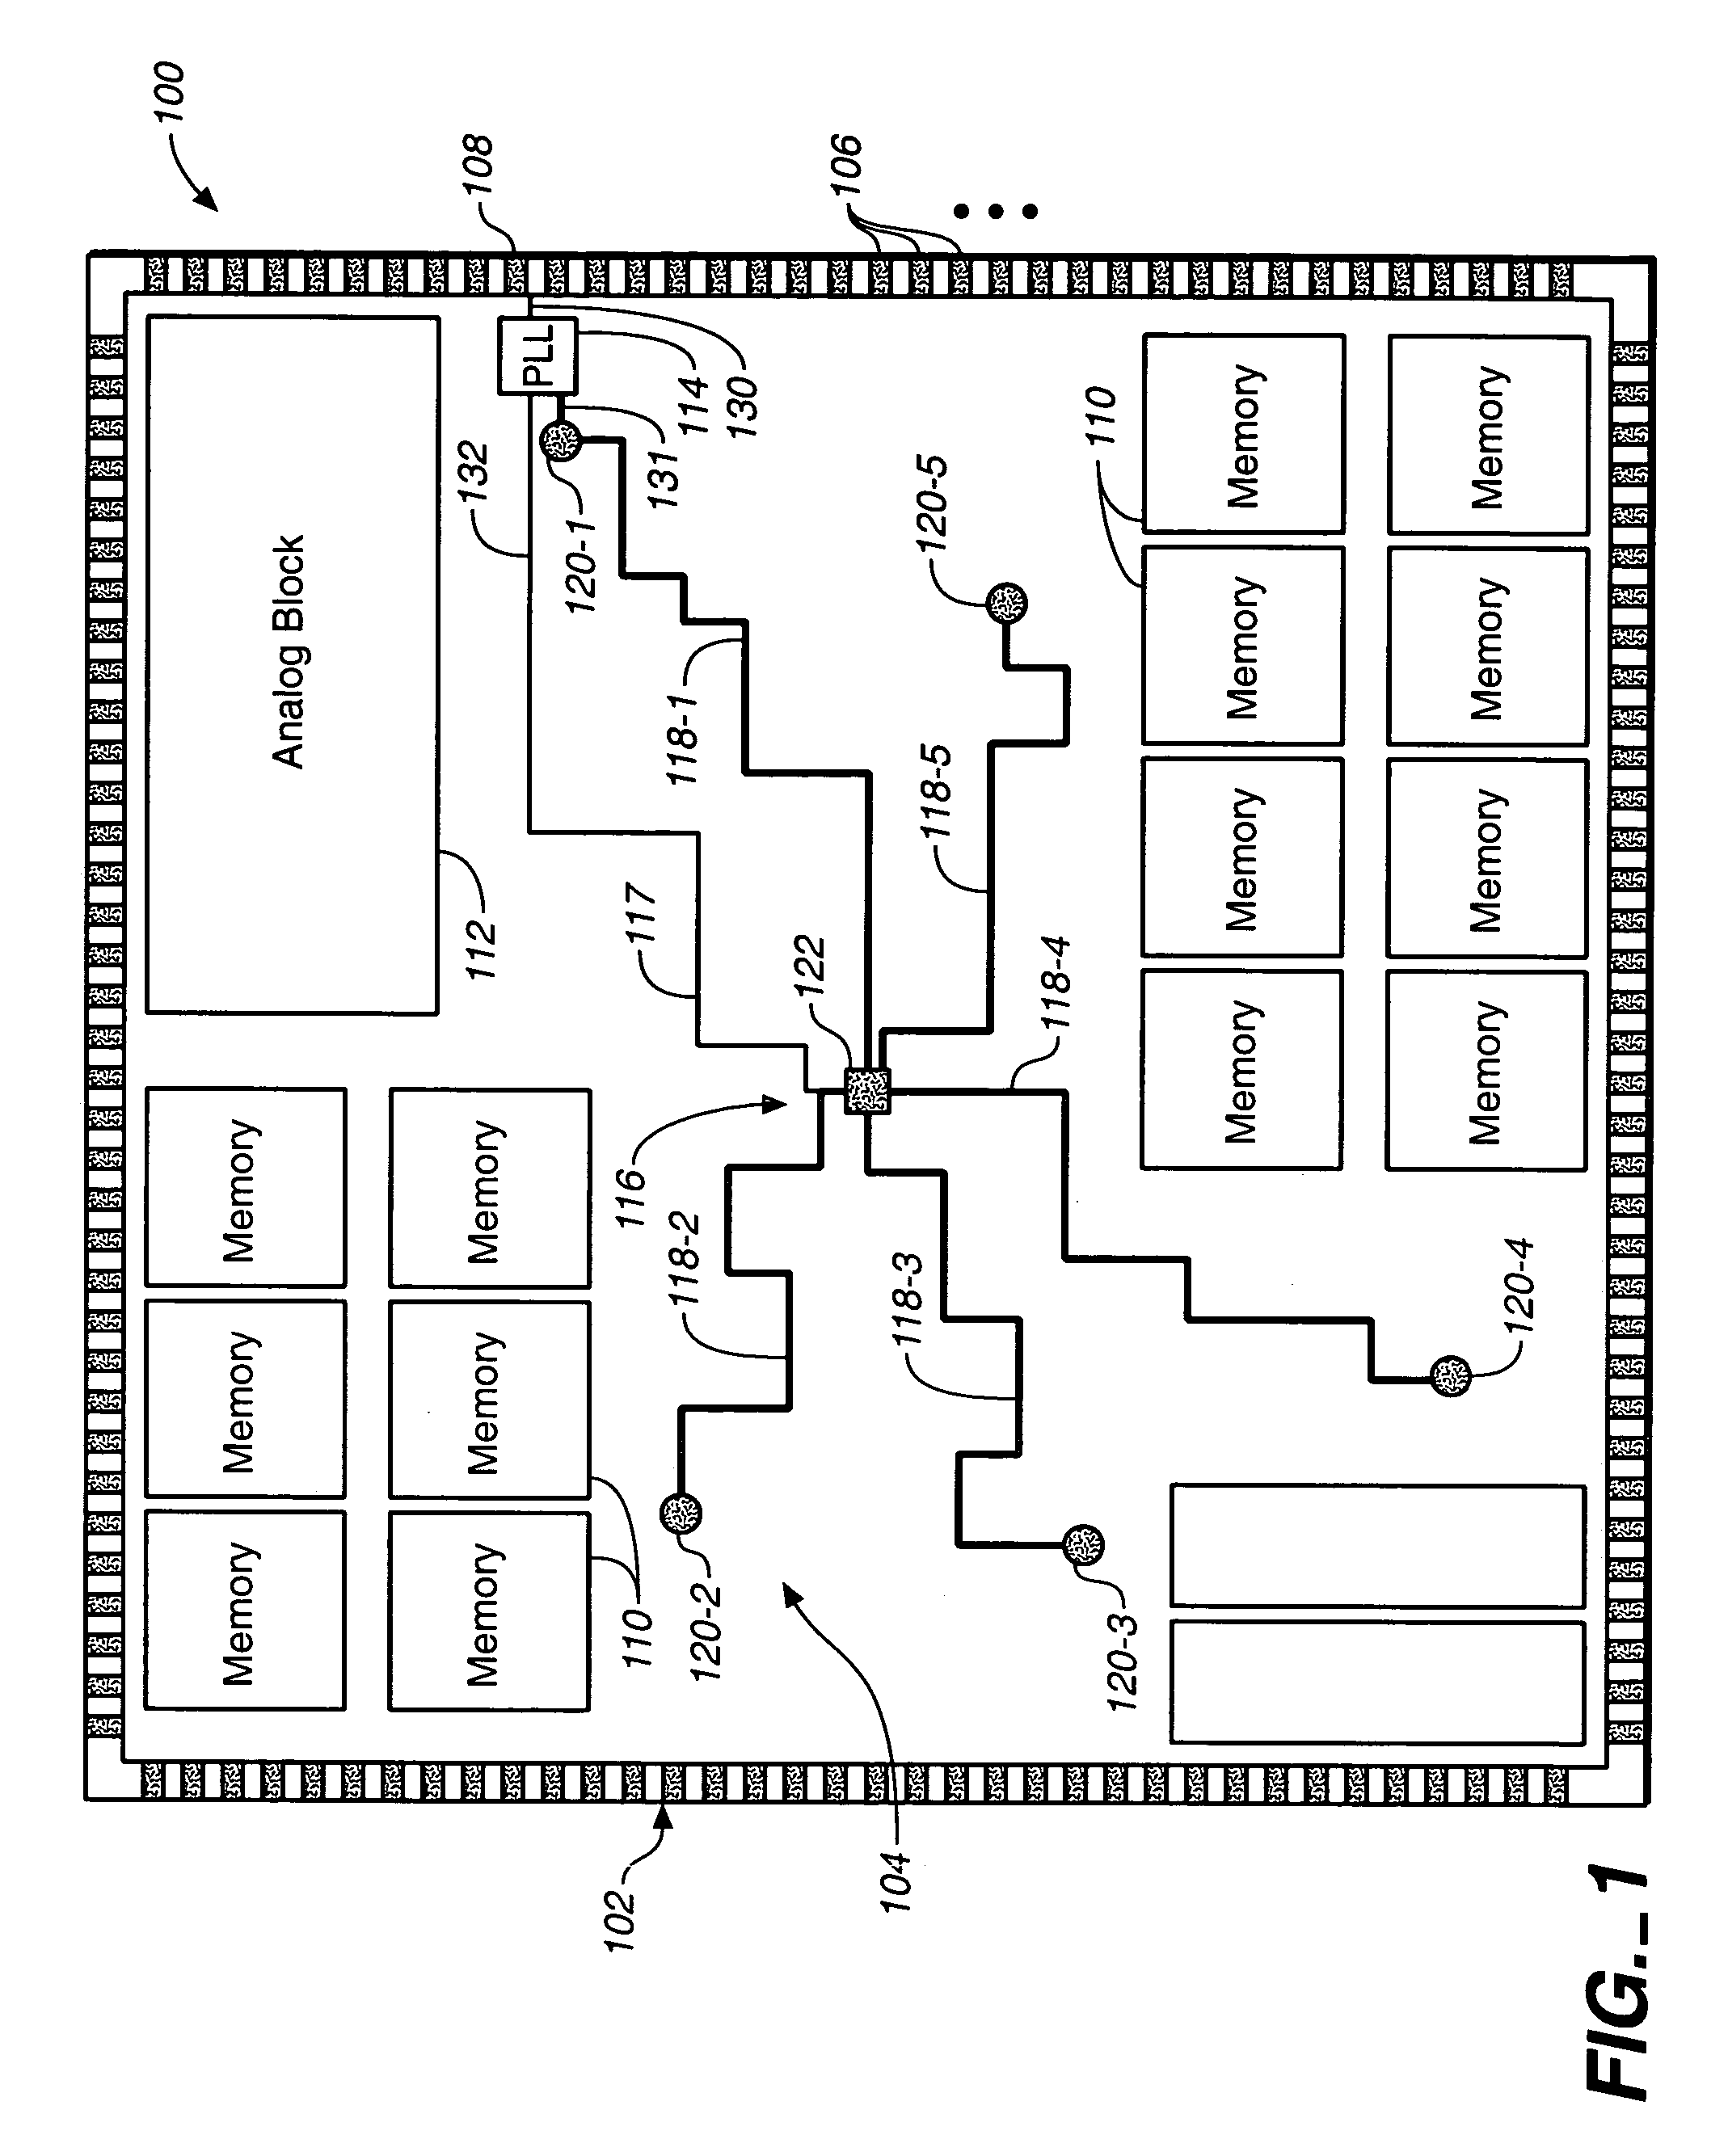 Chip level clock tree deskew circuit